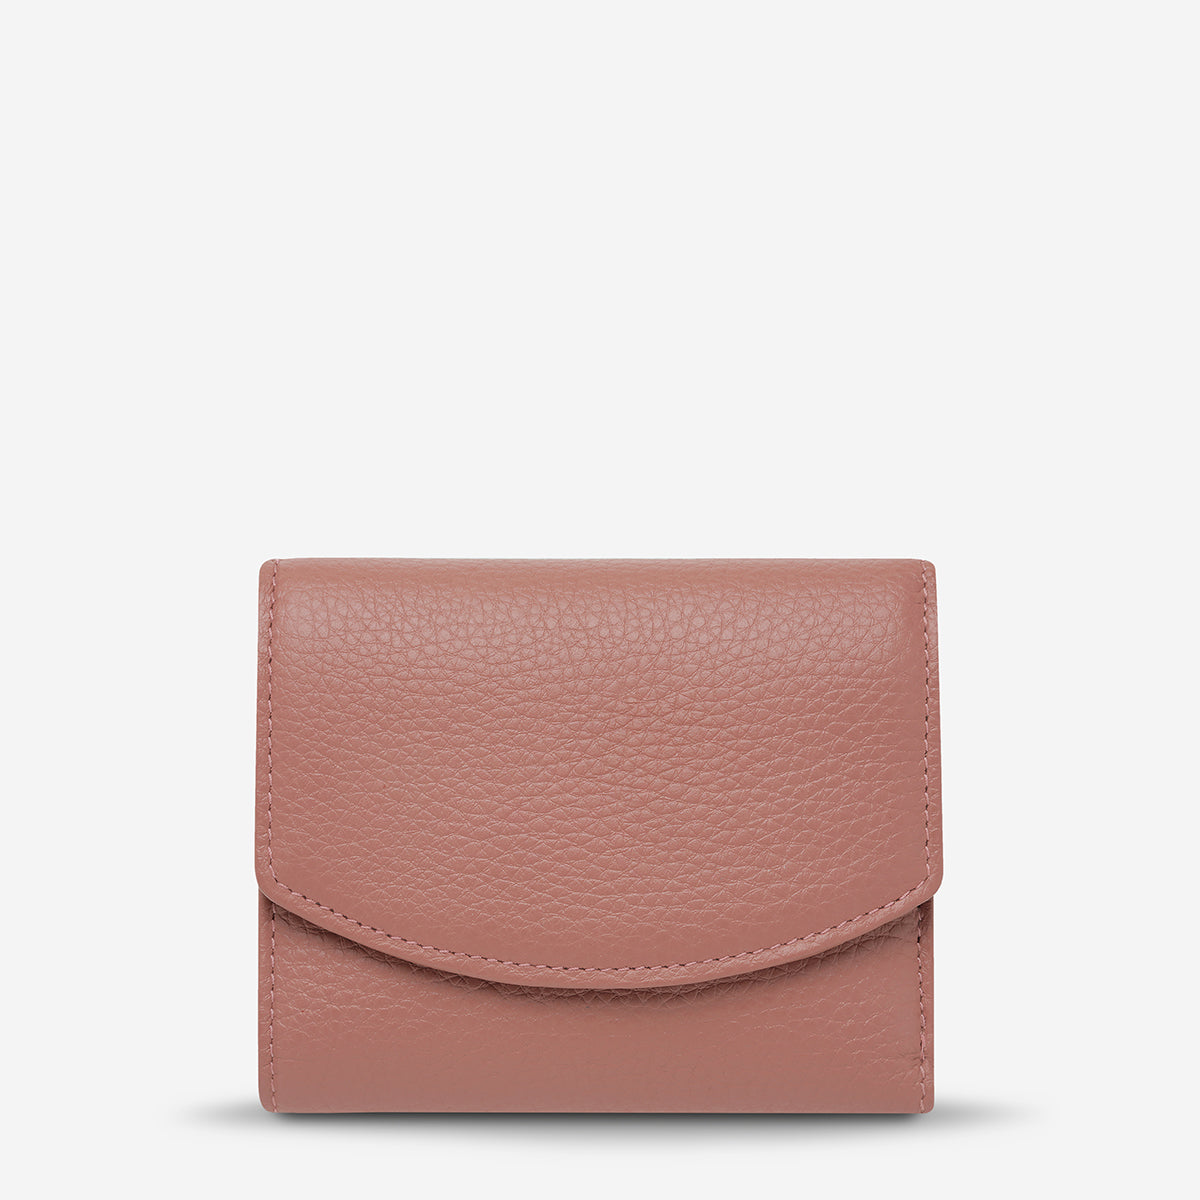 Lucky Brand's- “Kate Shoulder Bag” : r/handbags